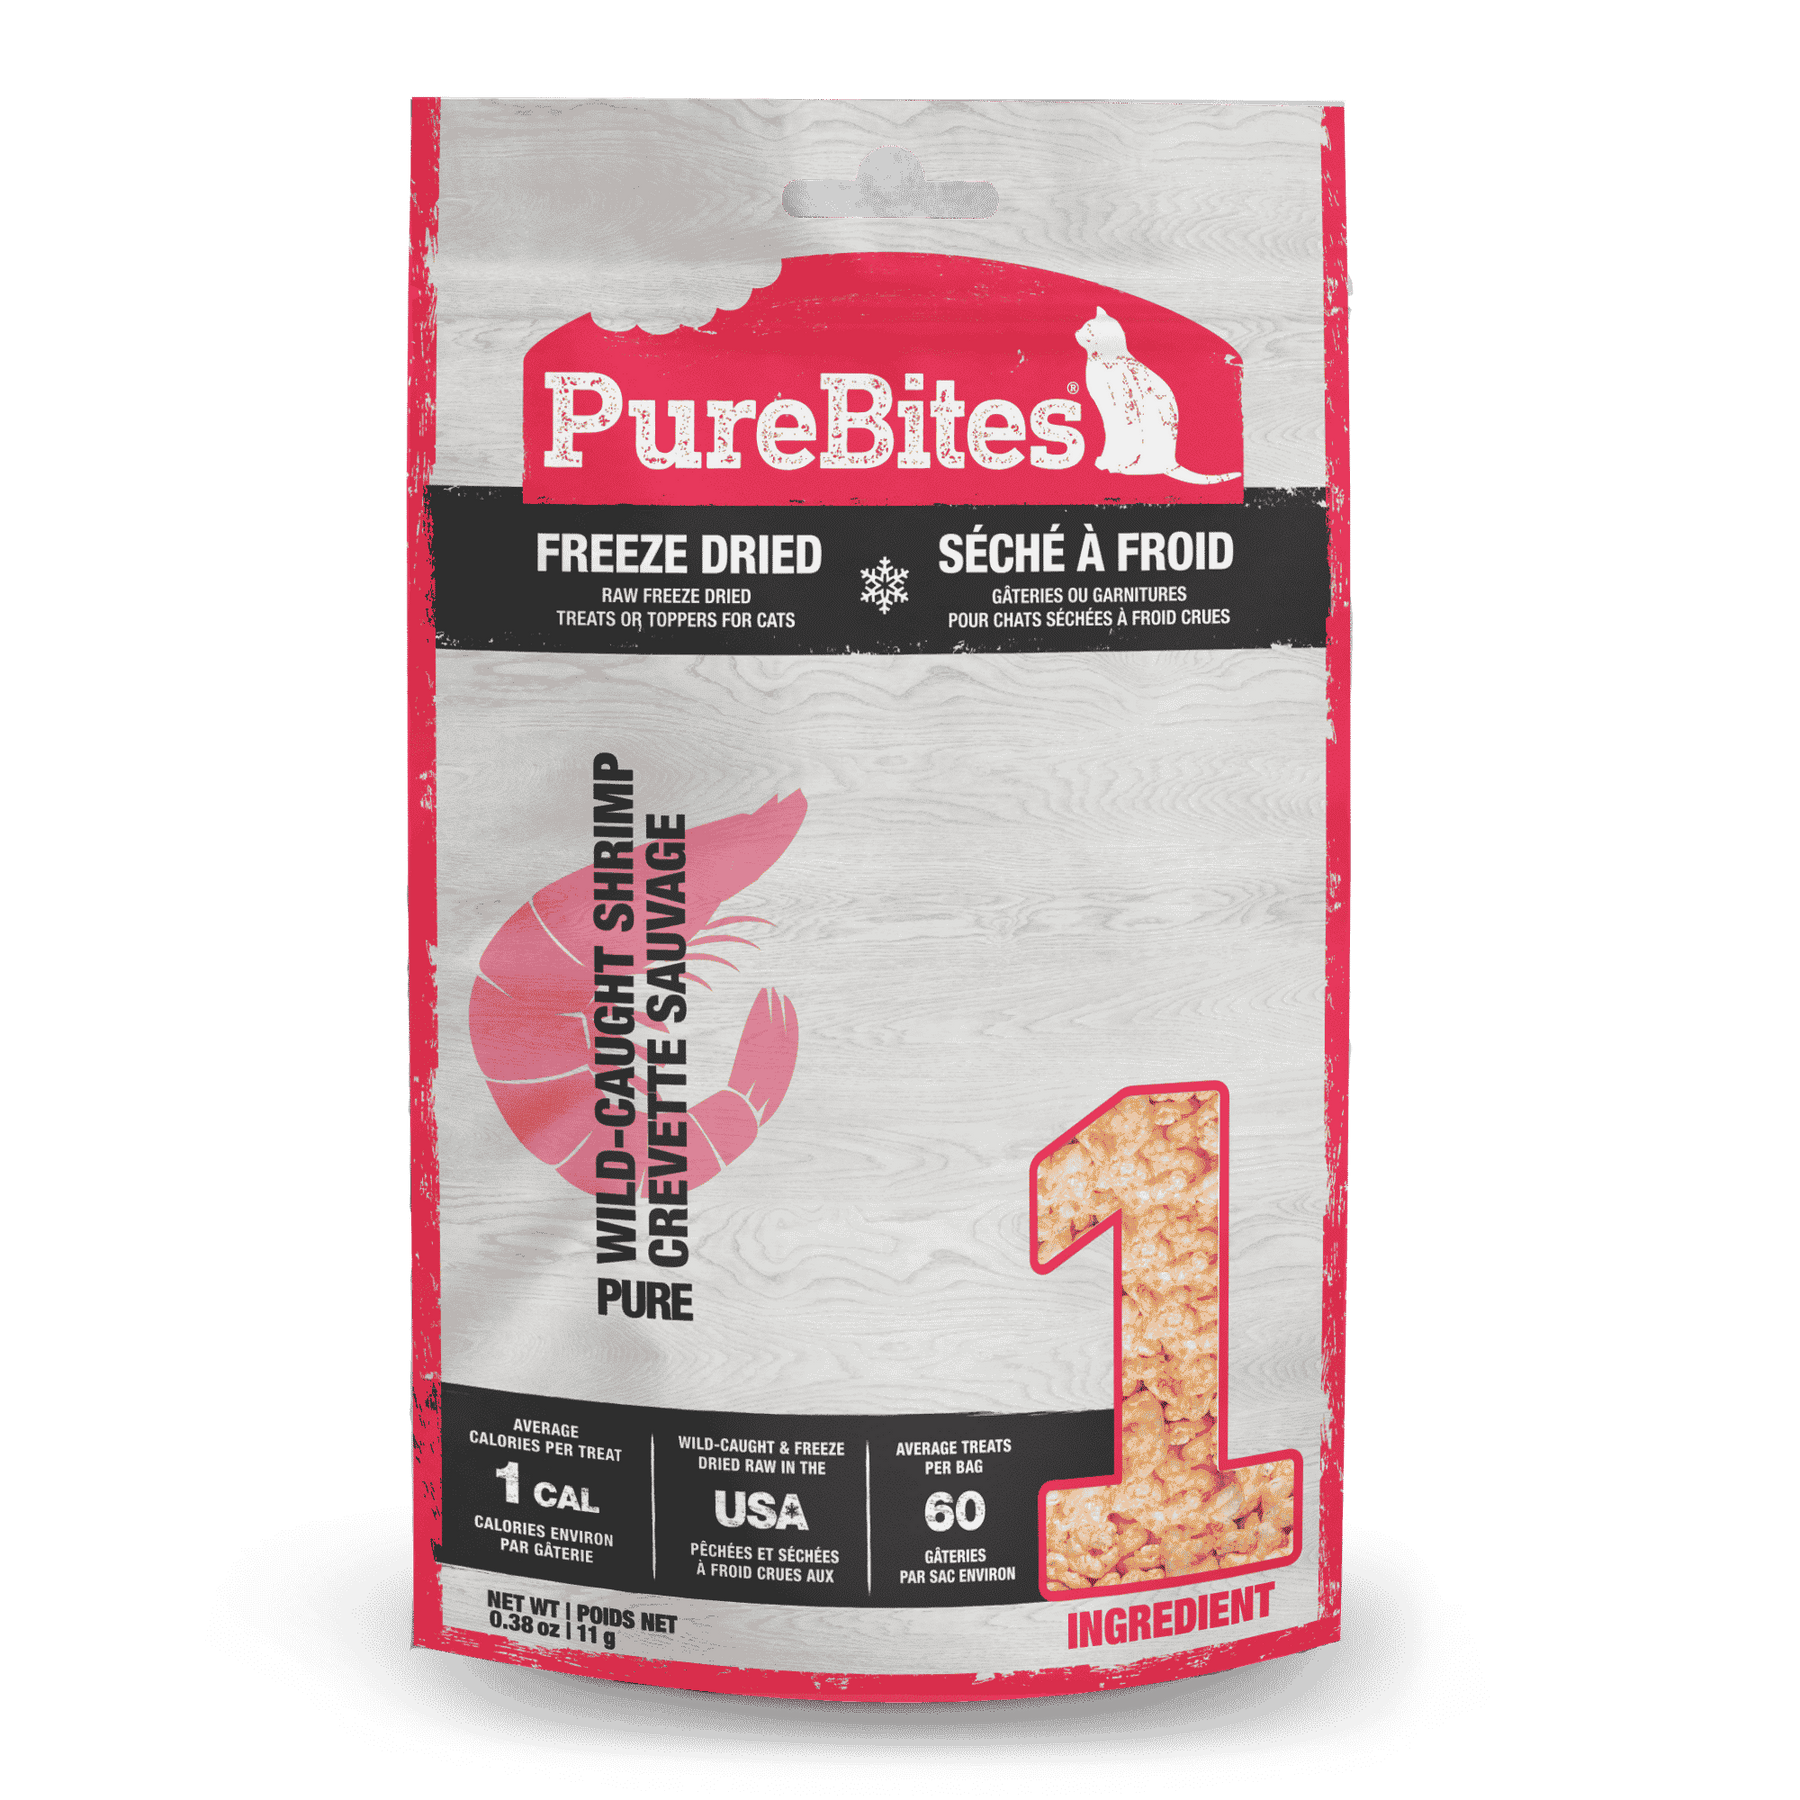 PureBites Freeze Dried Shrimp Wild-Caught Dog Treat-100% USA